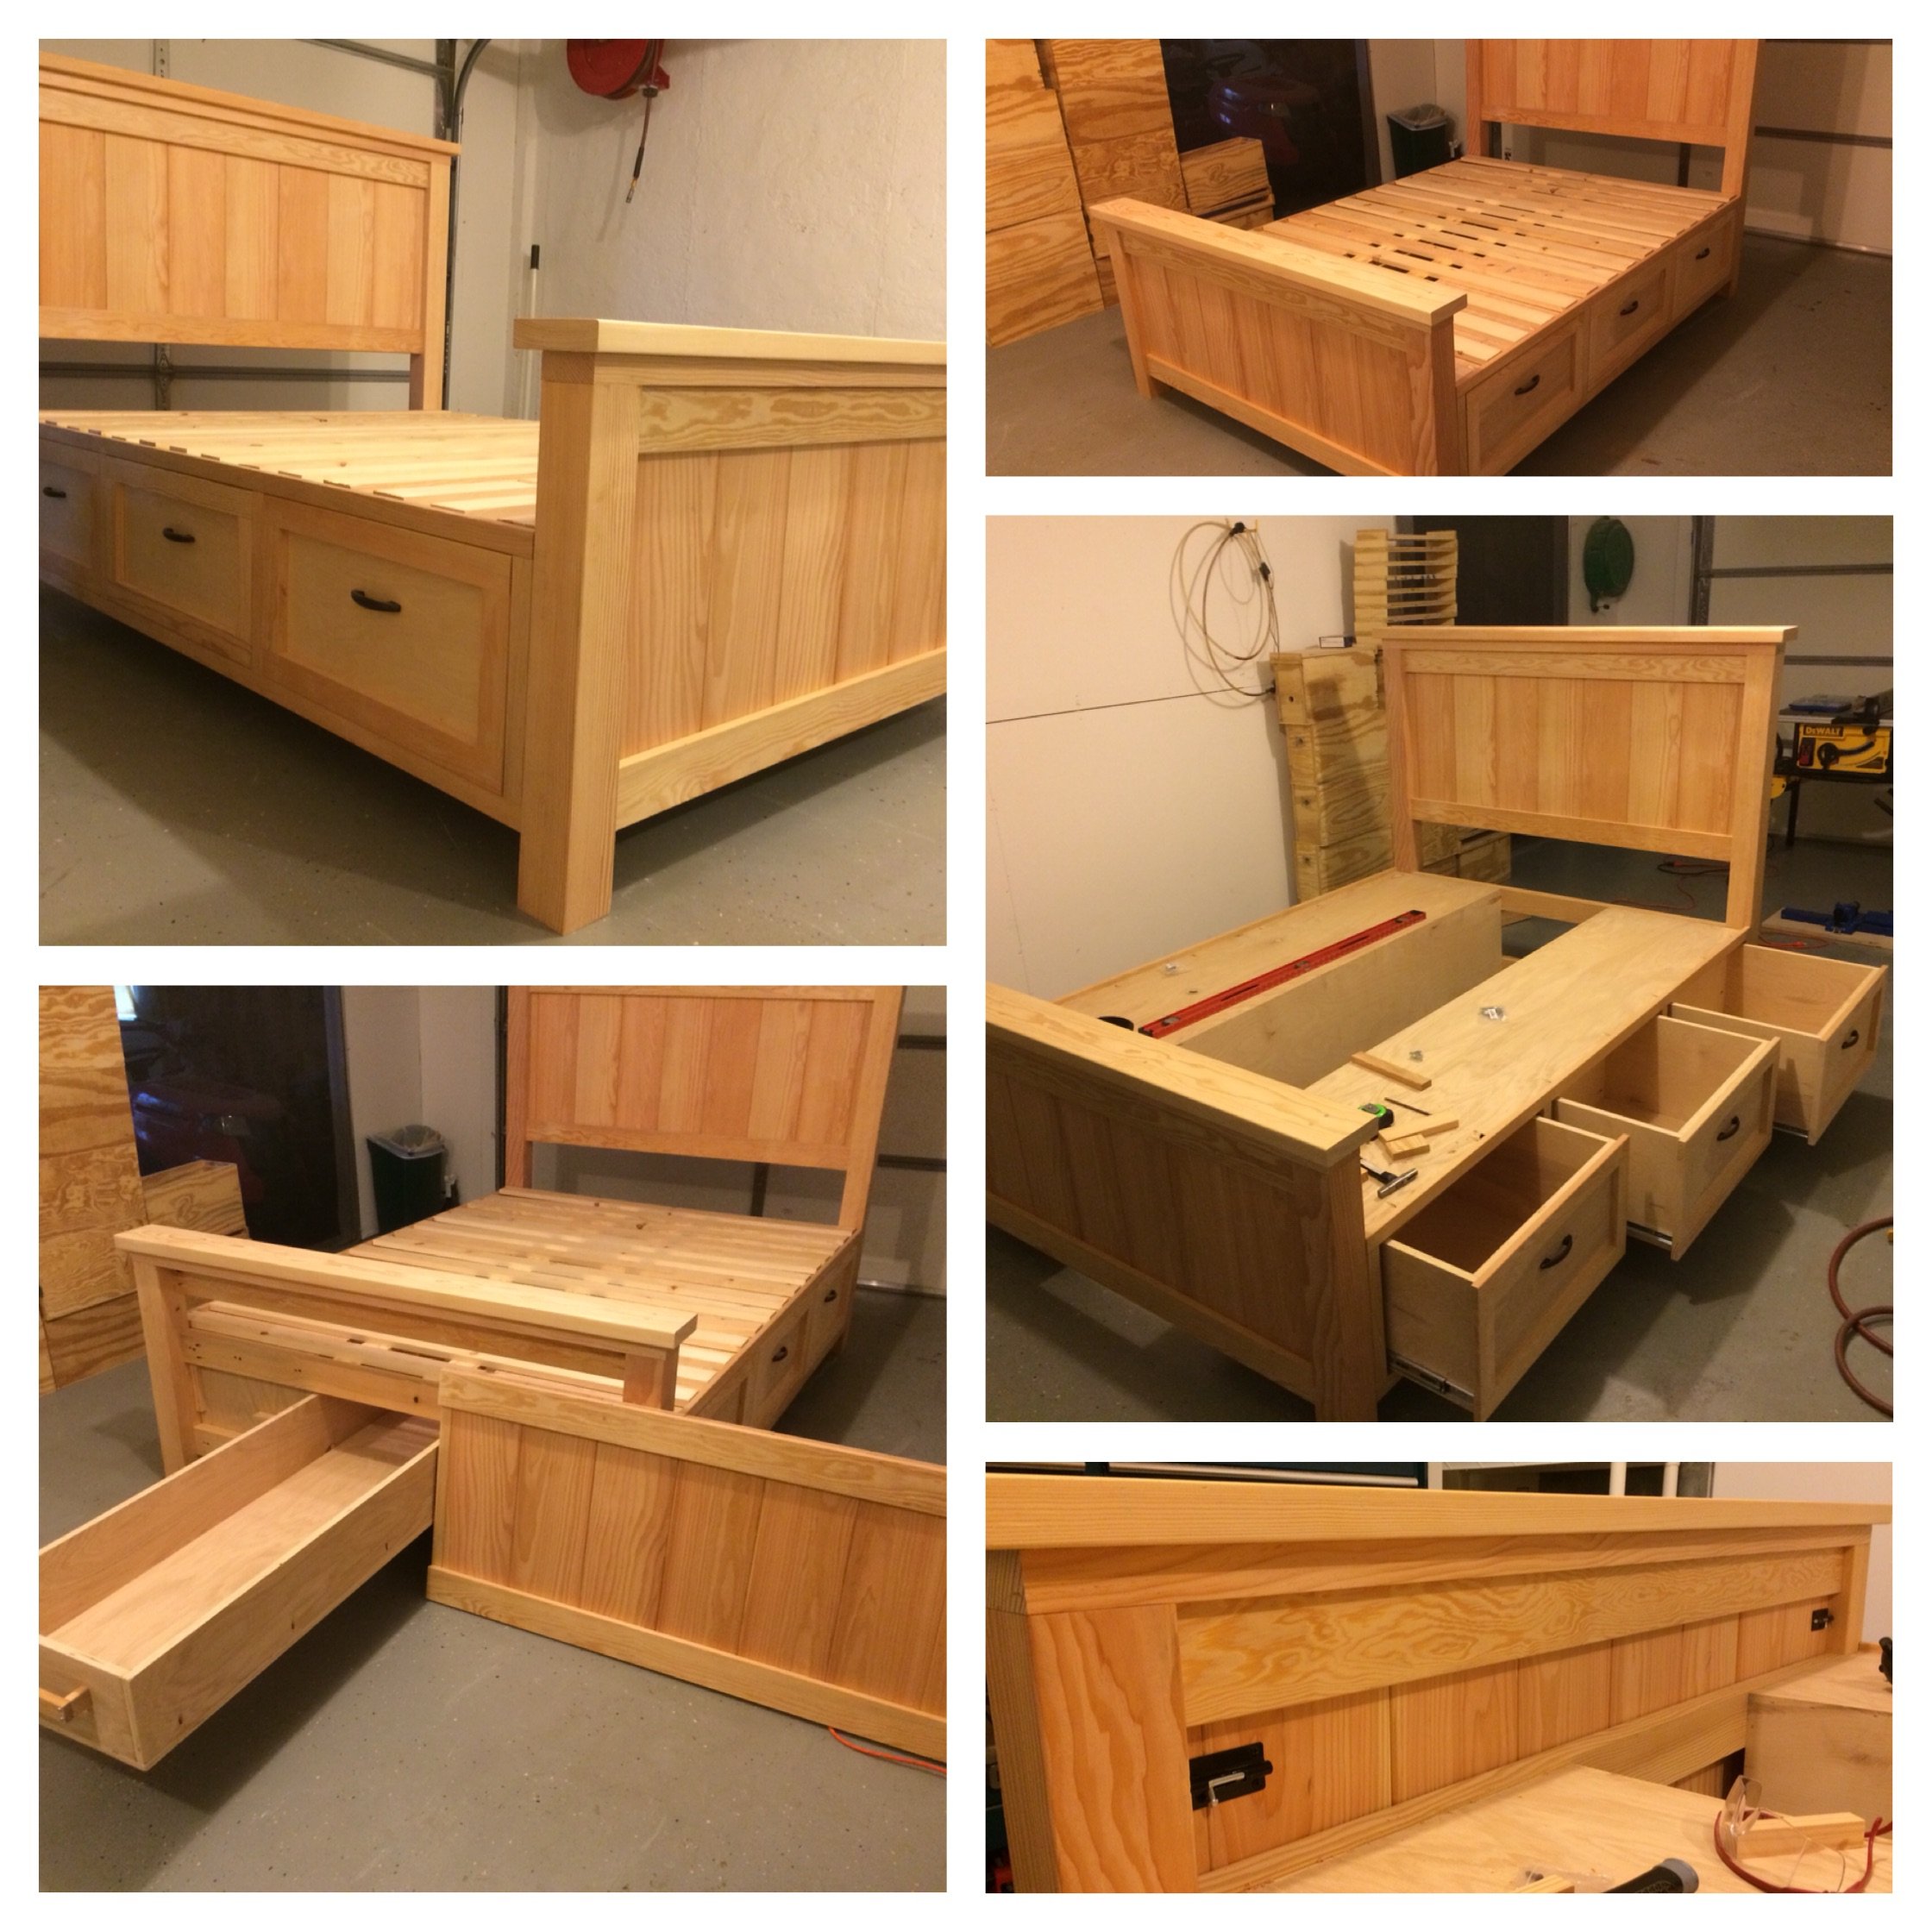  woodworking plans platform bed with storage